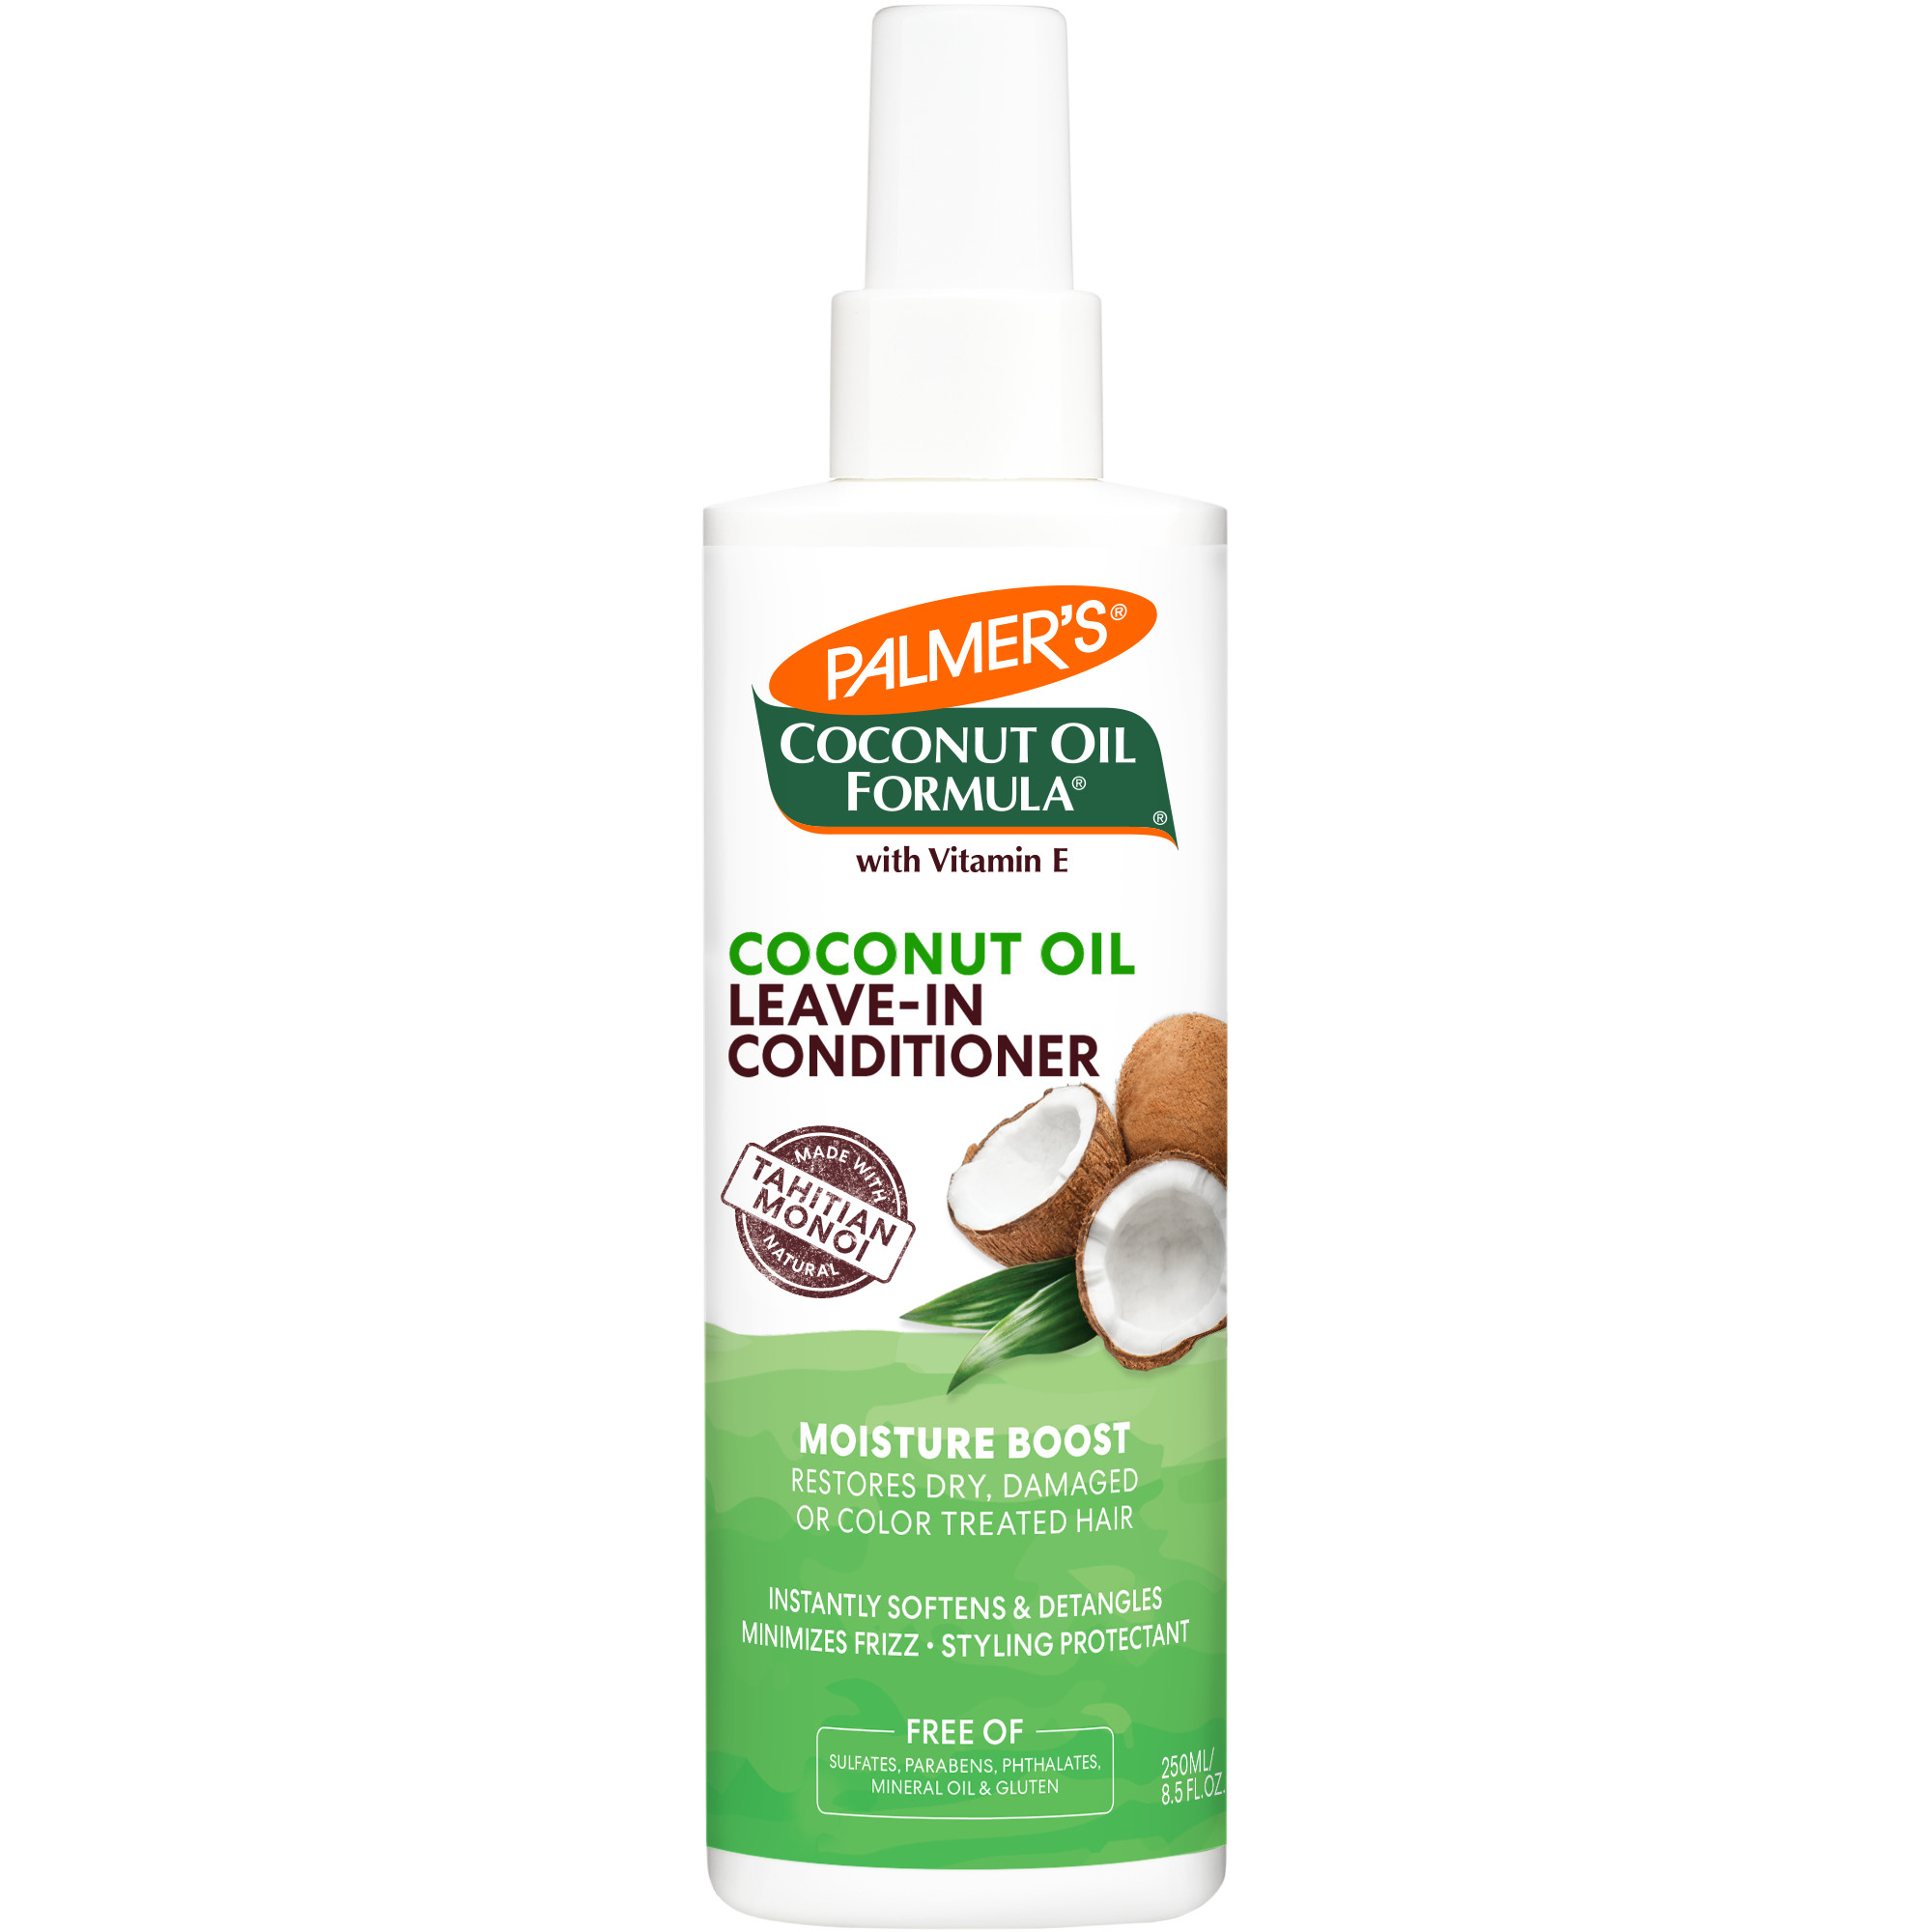 Palmer's Coconut Oil Formula Moisture Boost Leave-in Conditioner, 8.5 oz. - image 1 of 13